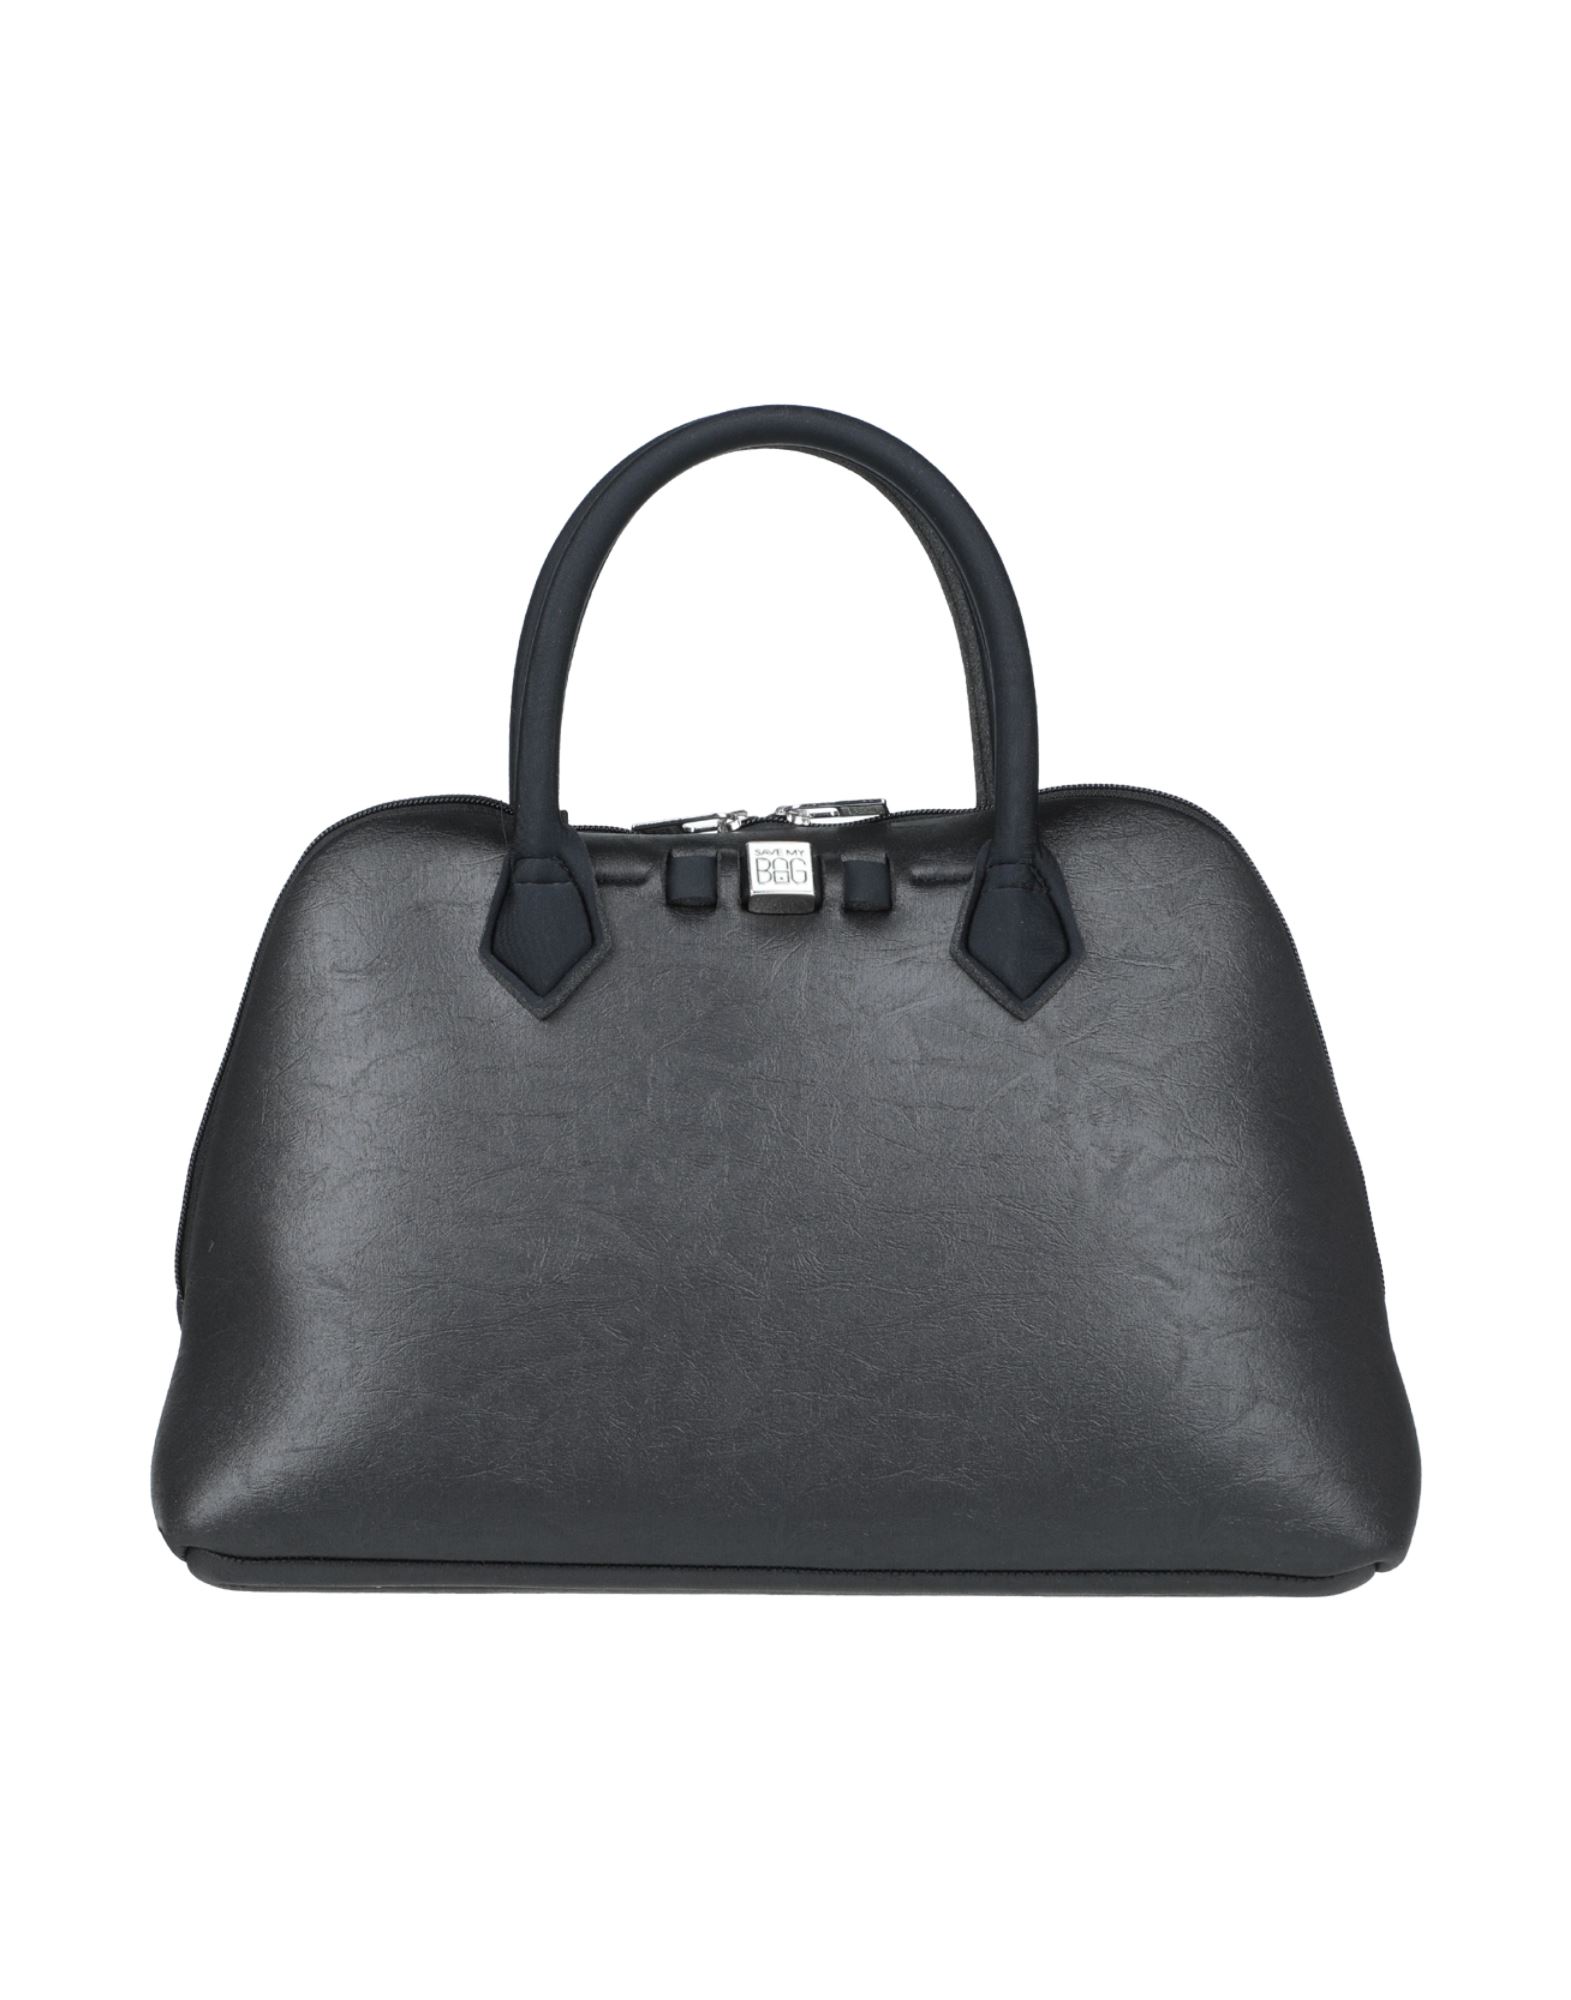 Save My Bag Handbags In Black